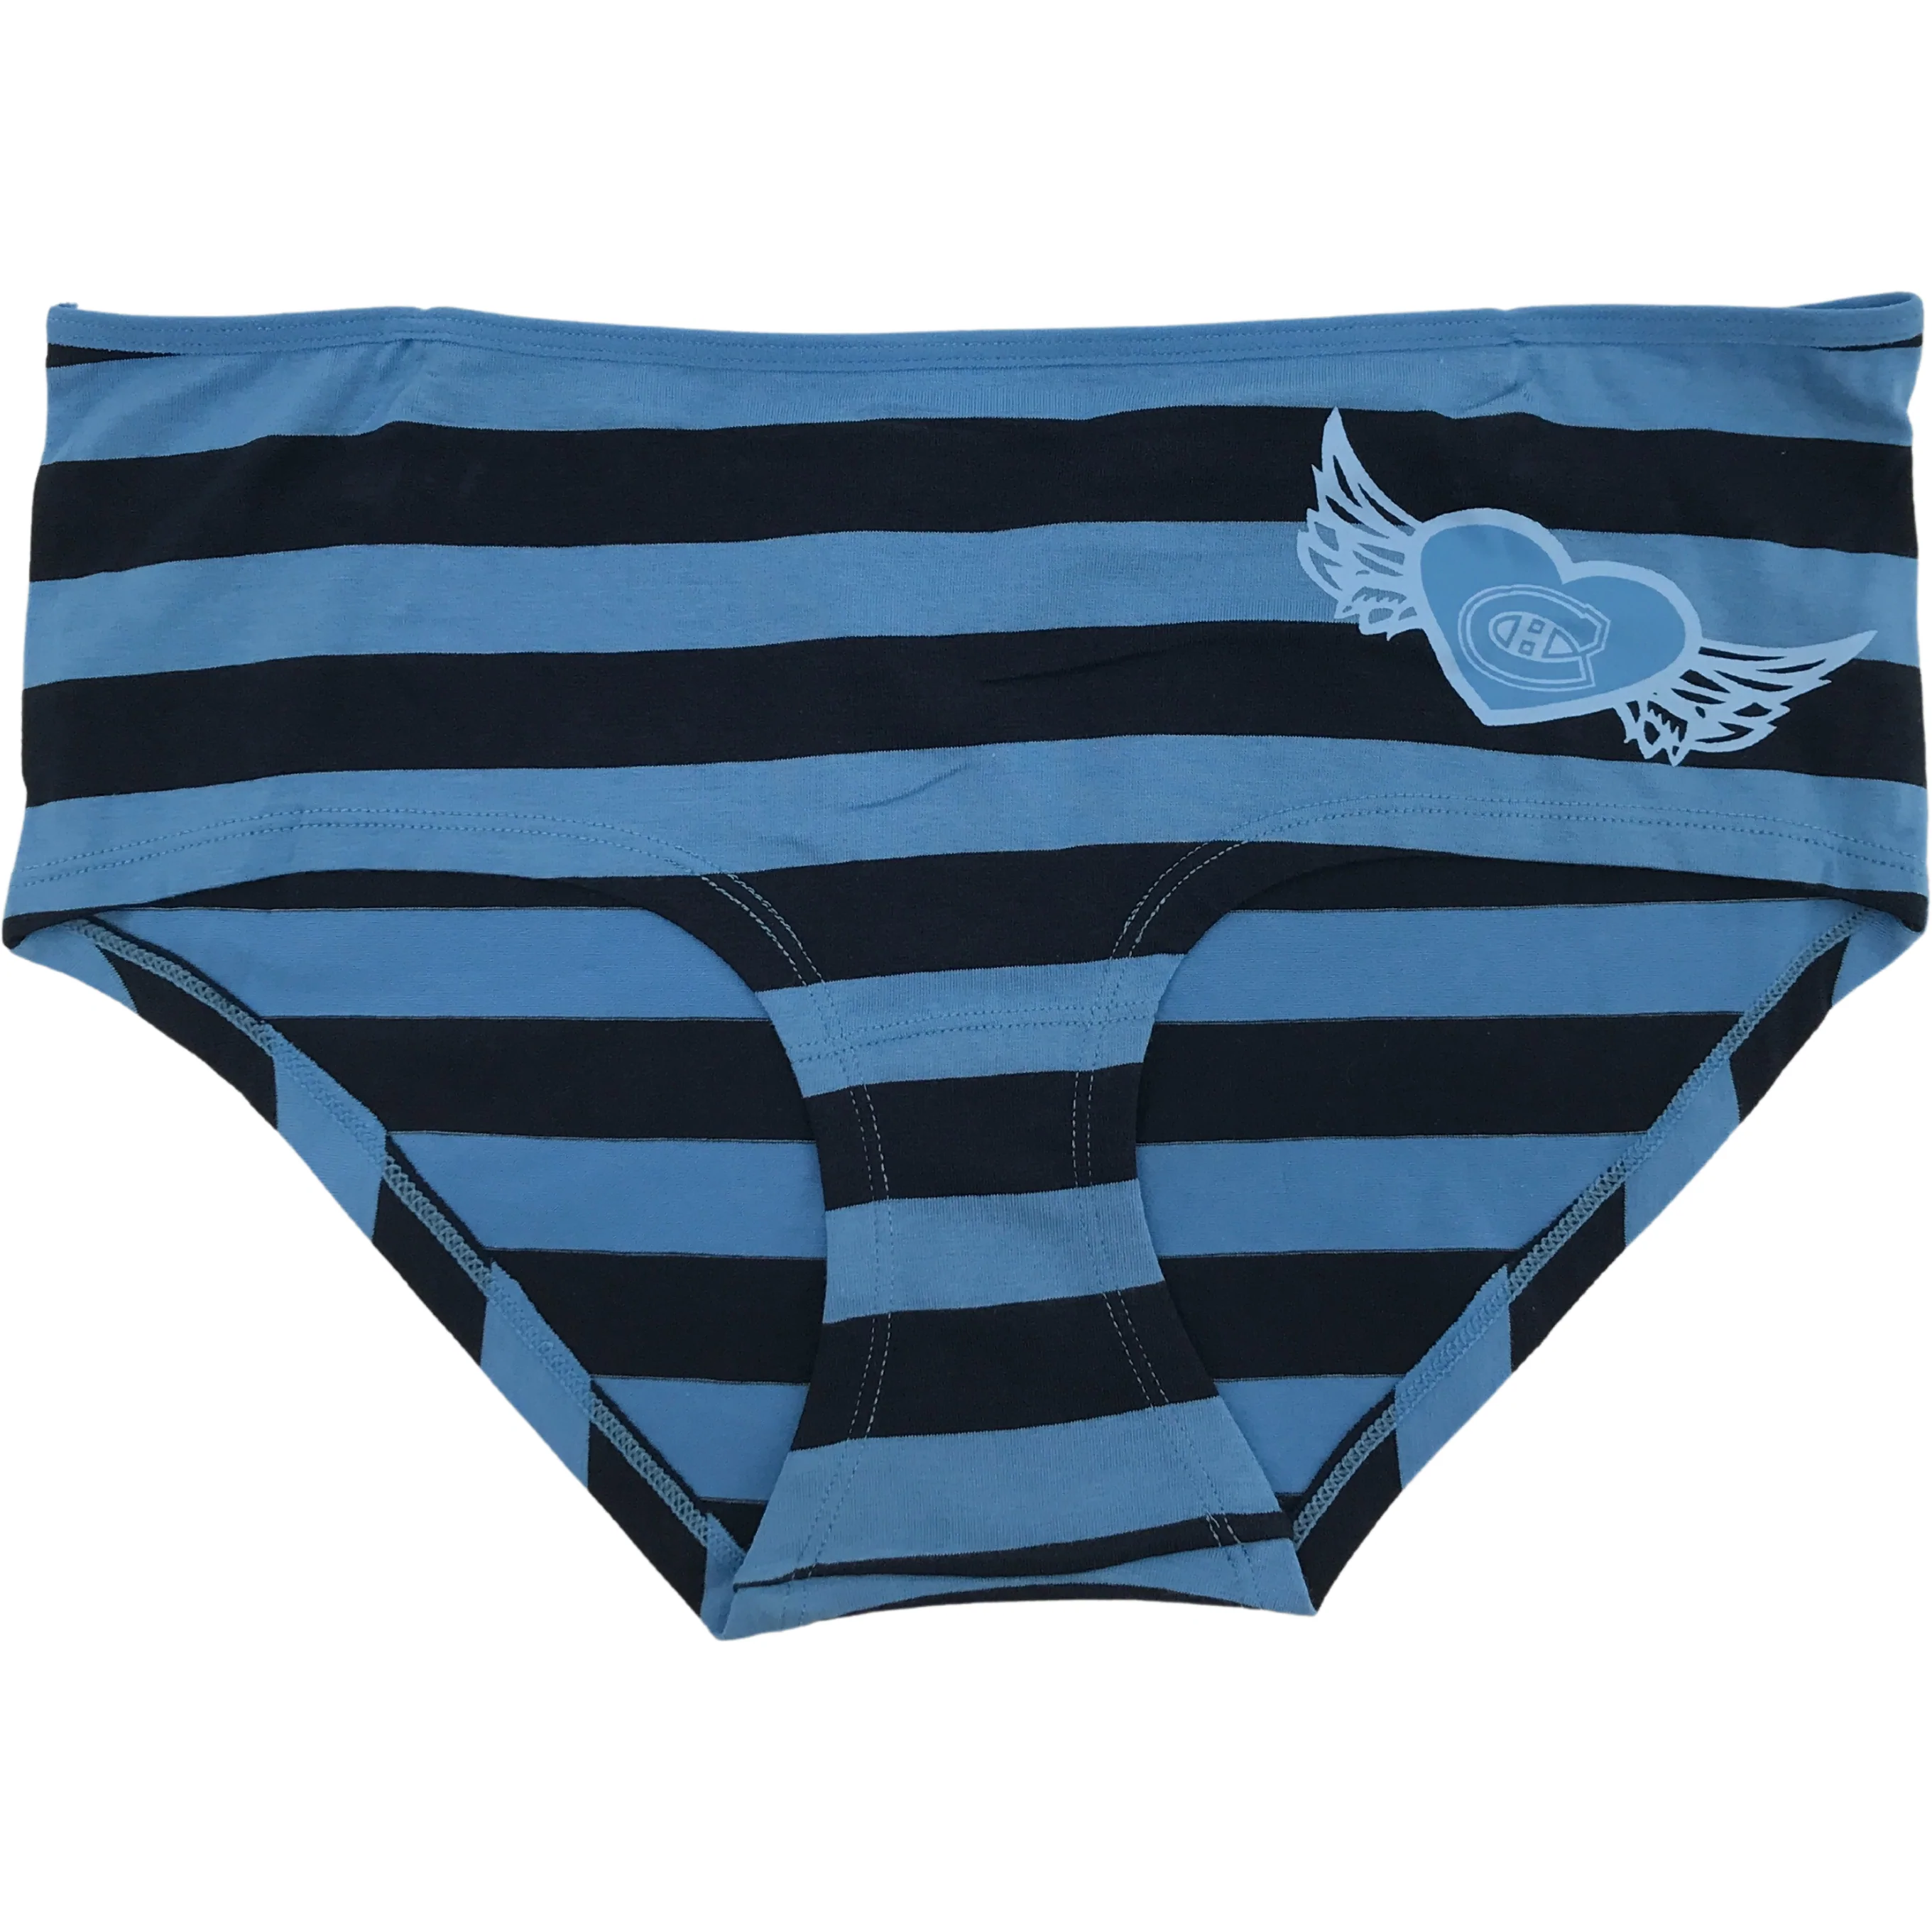 NHL Montreal Canadians Ladies Boycut Underwear / Various Sizes / 2 pack / Panties / 2 Toned Blue / Montreal Canadians Logo